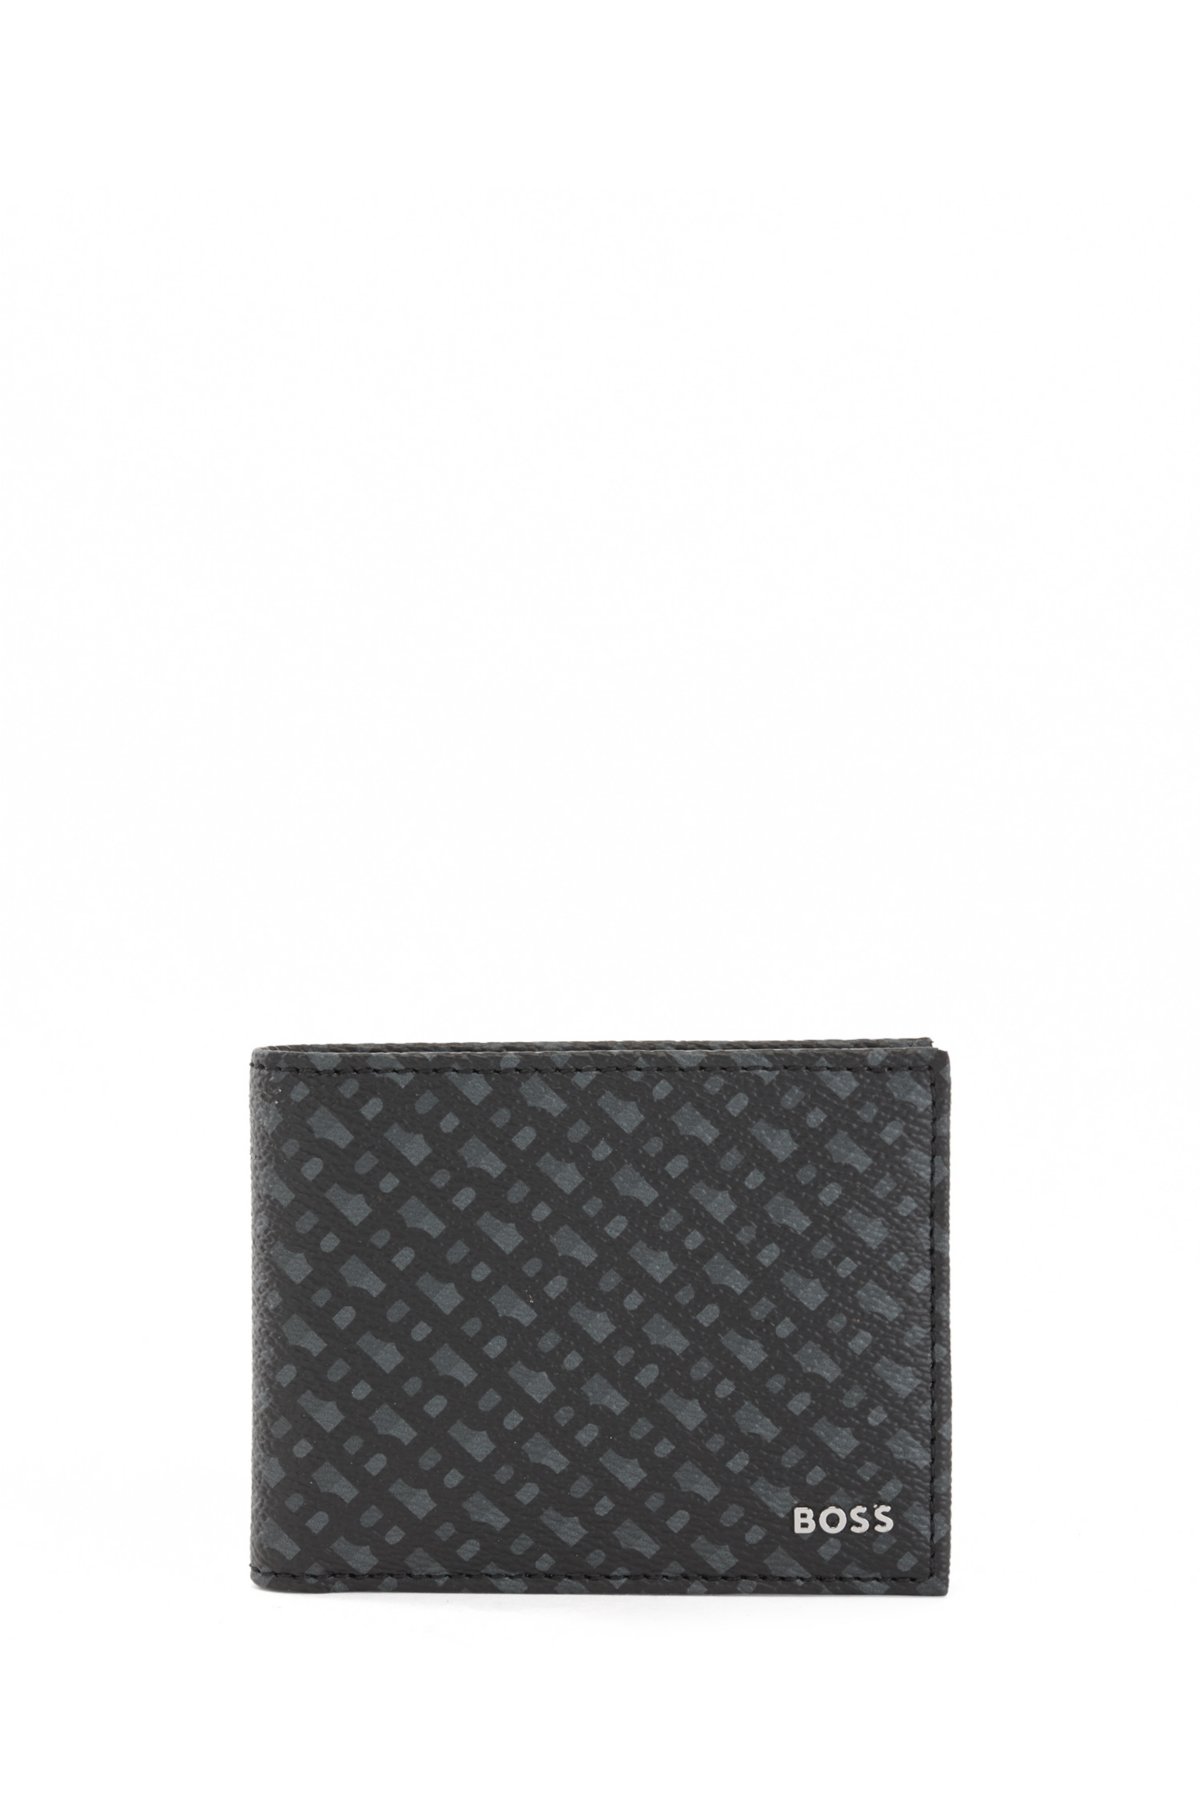 Louis Vuitton, Accessories, Louis Vuitton Monogram Black White Socks 6 8